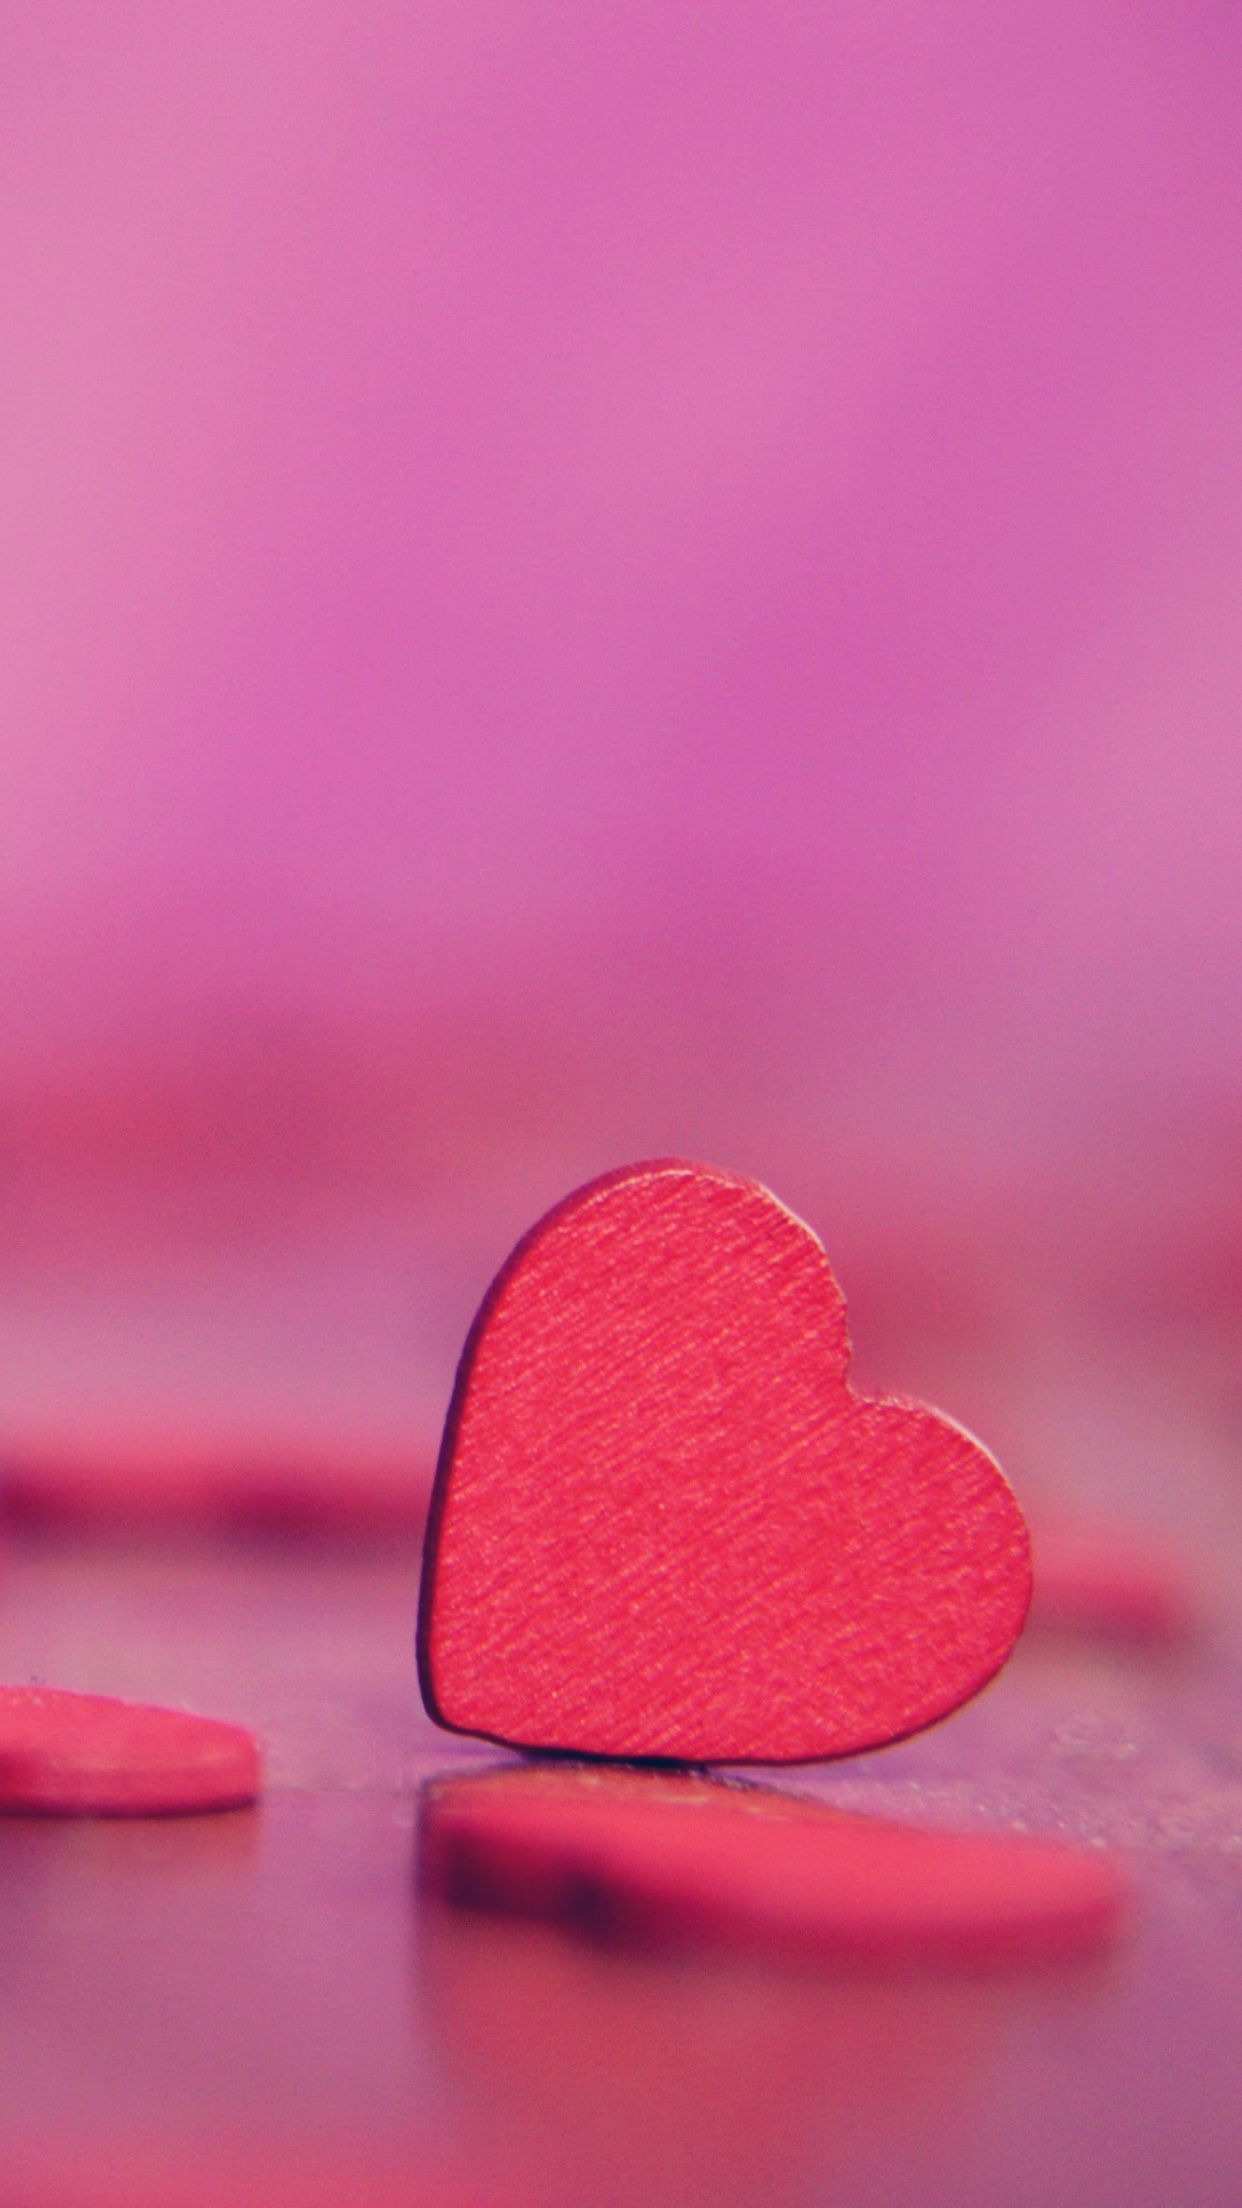 Love hearts Wallpaper 4K, Bokeh, Pink hearts, Alone